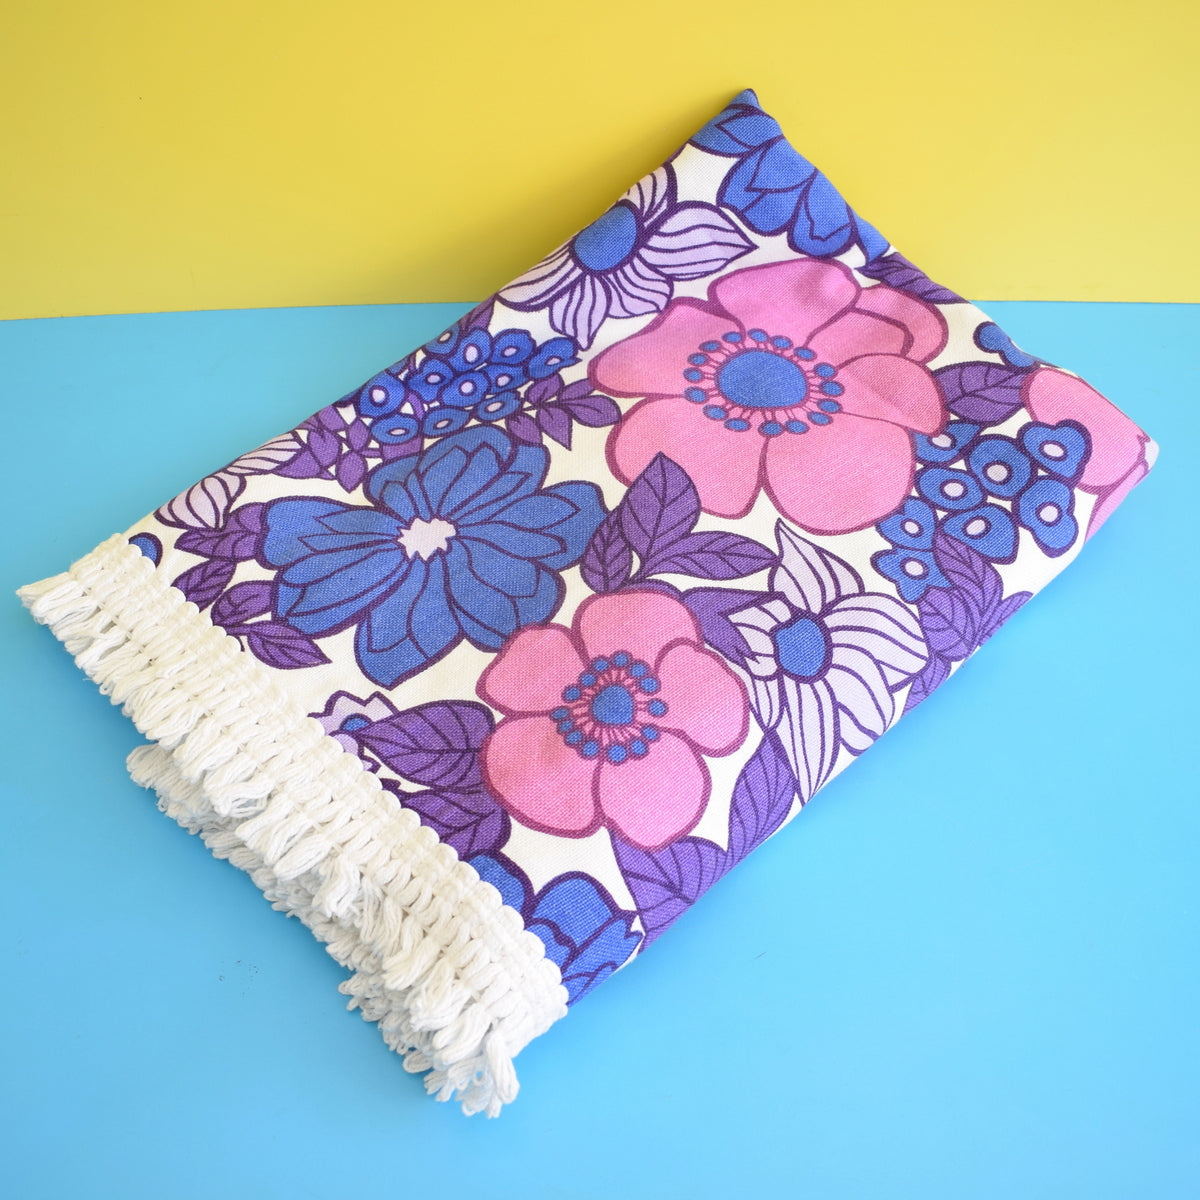 Vintage 1960s Single Bed Cover - Flower Power - Purple